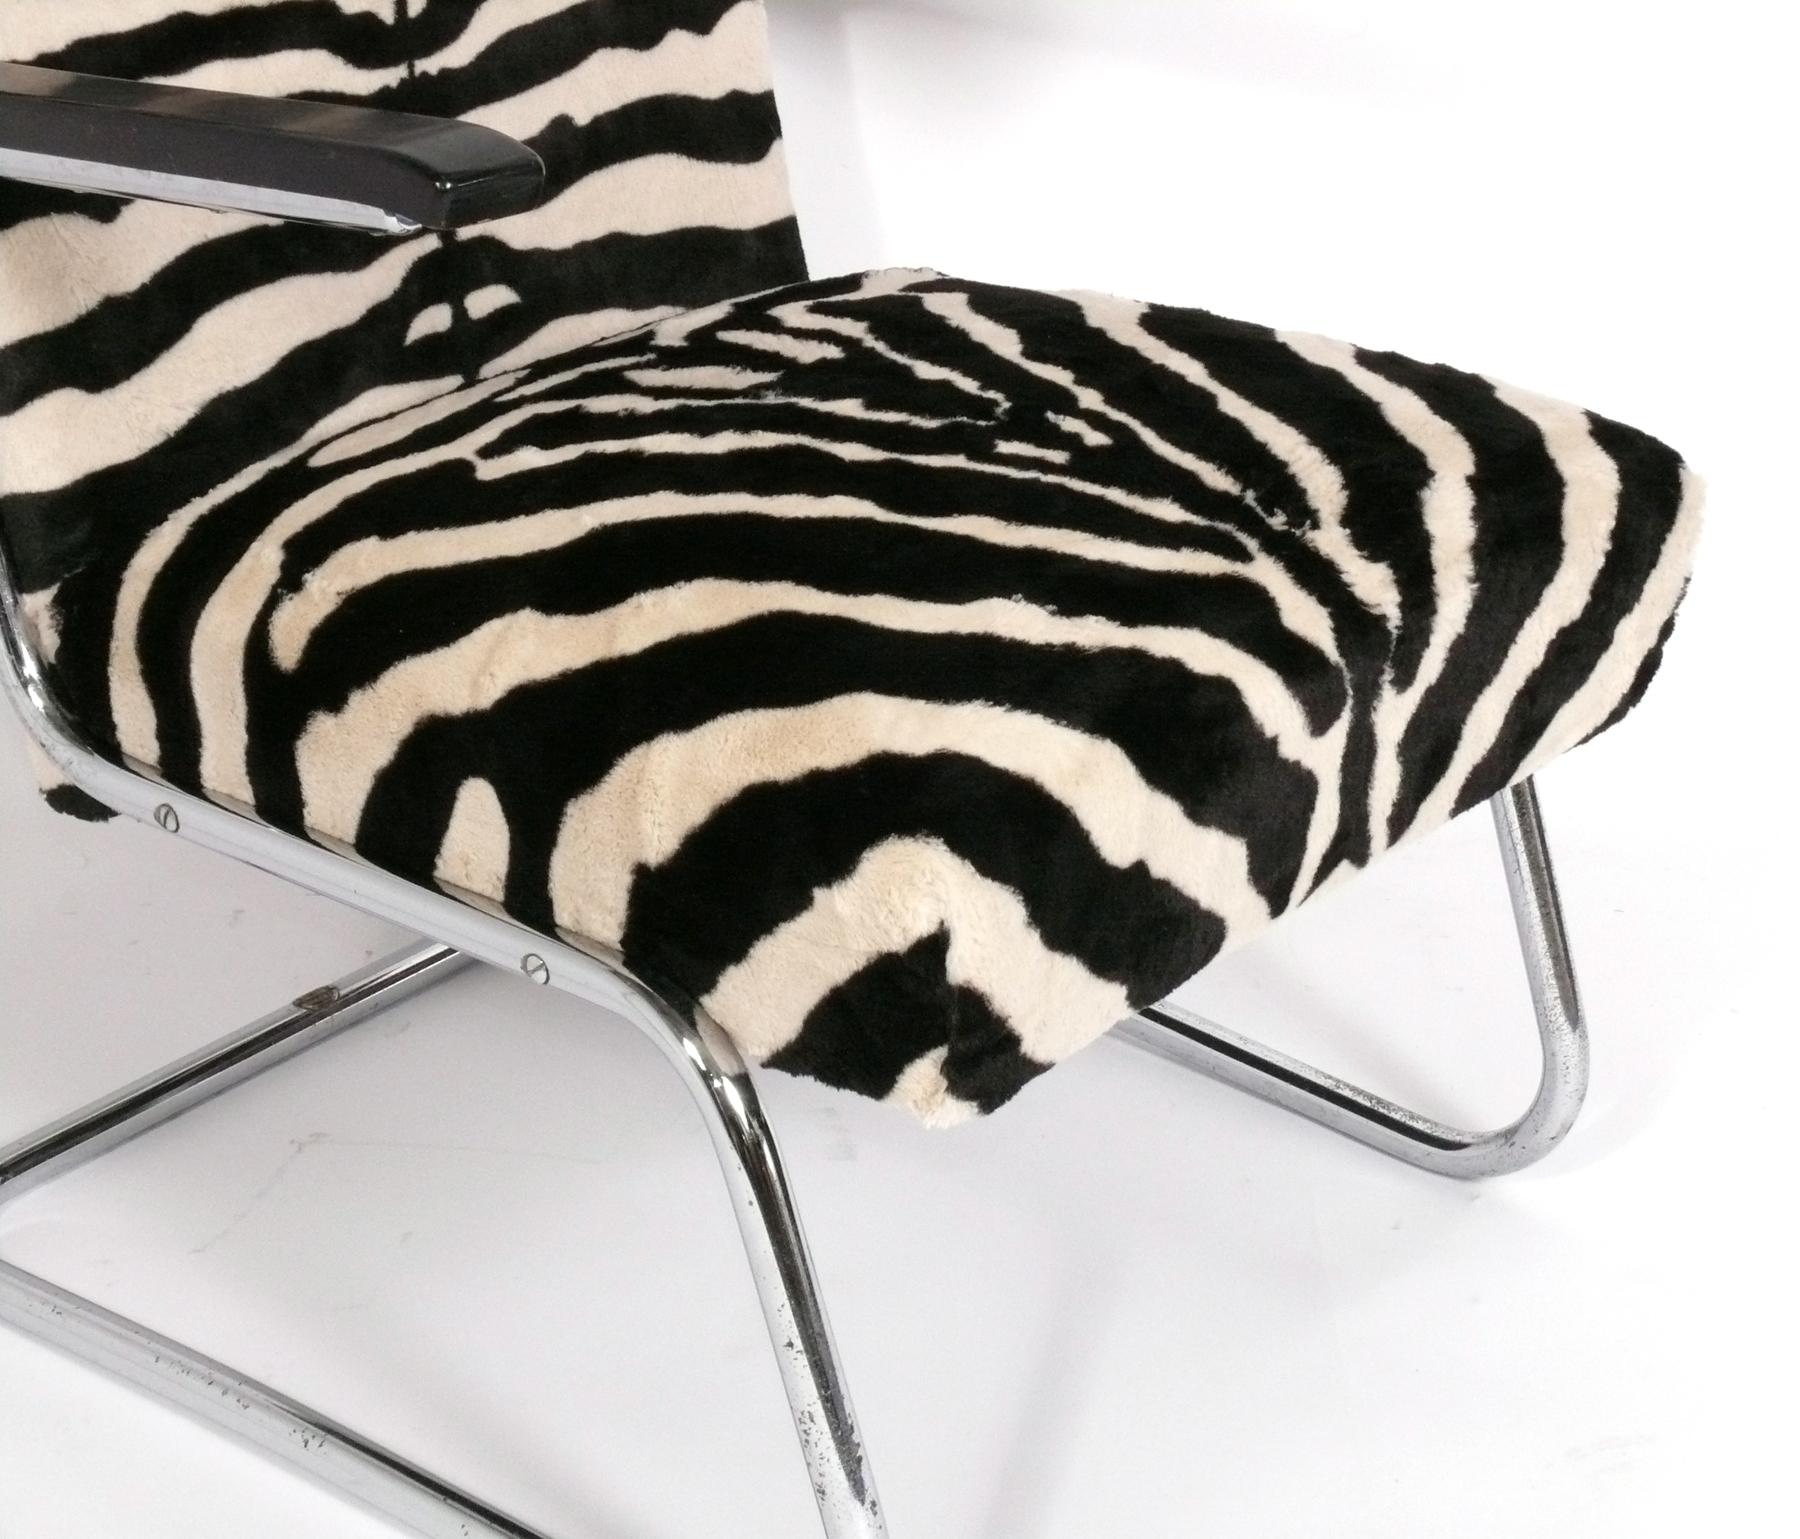 Plated Art Deco Bauhaus Era Chrome Lounge Chair in Zebra Print Fabric, 1930s